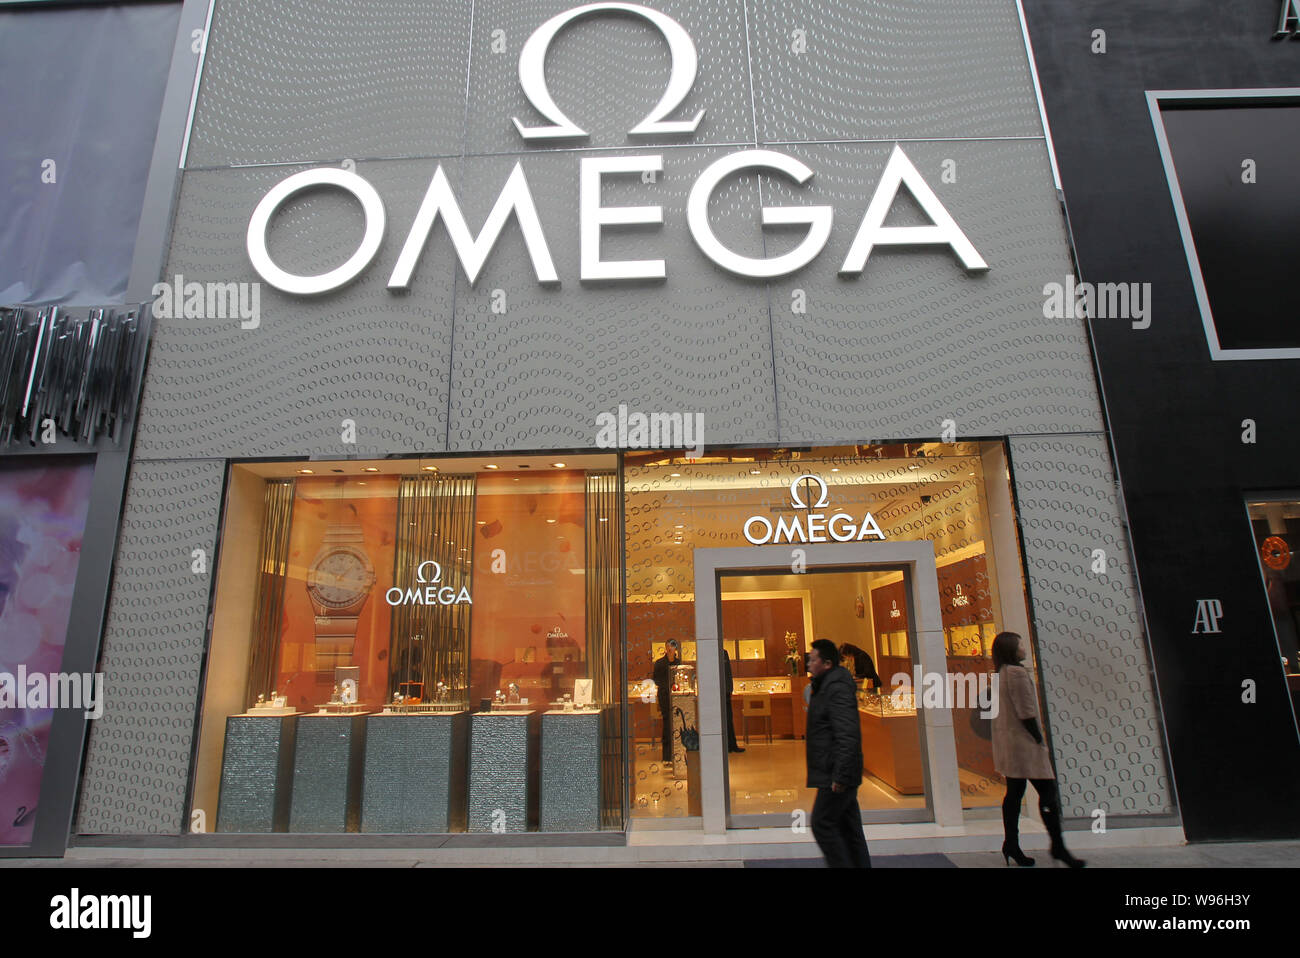 omega retailers near me